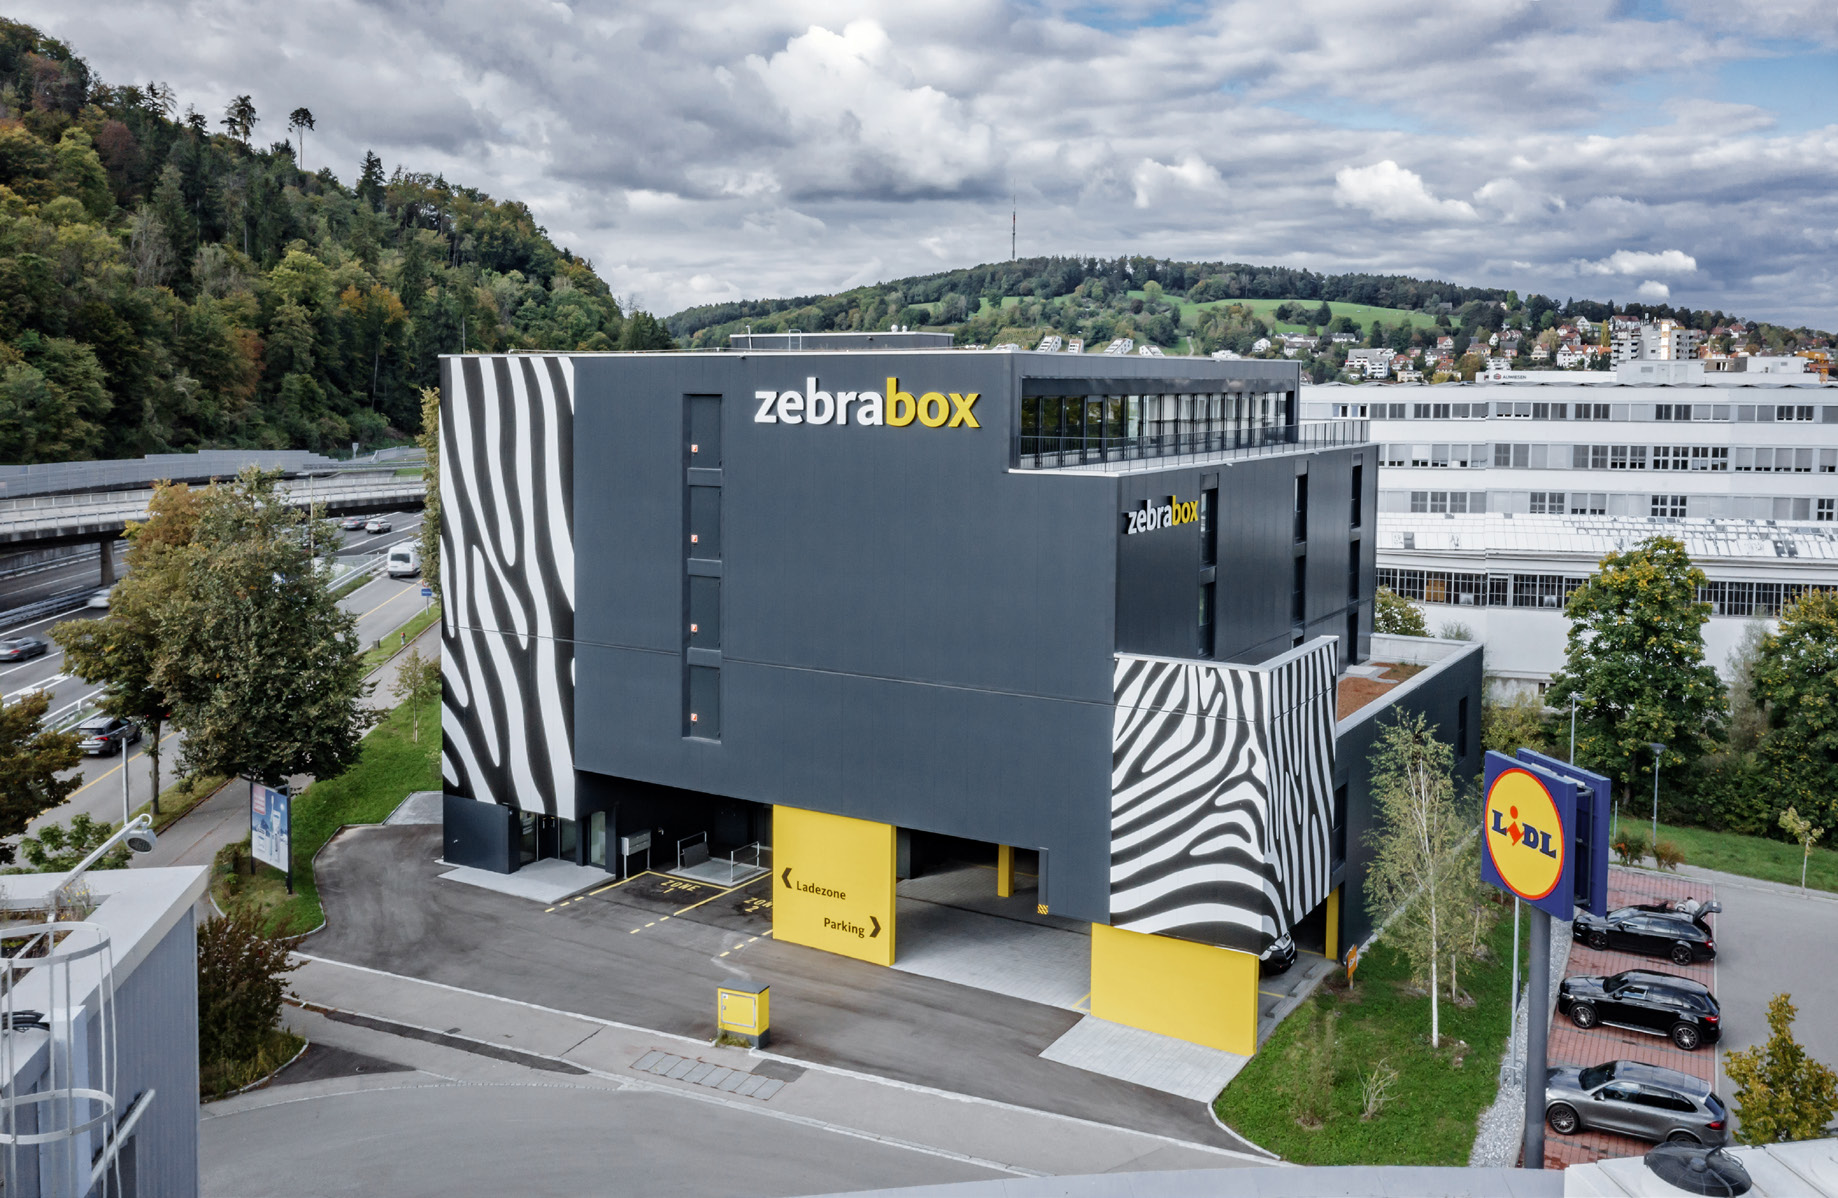 zebrabox